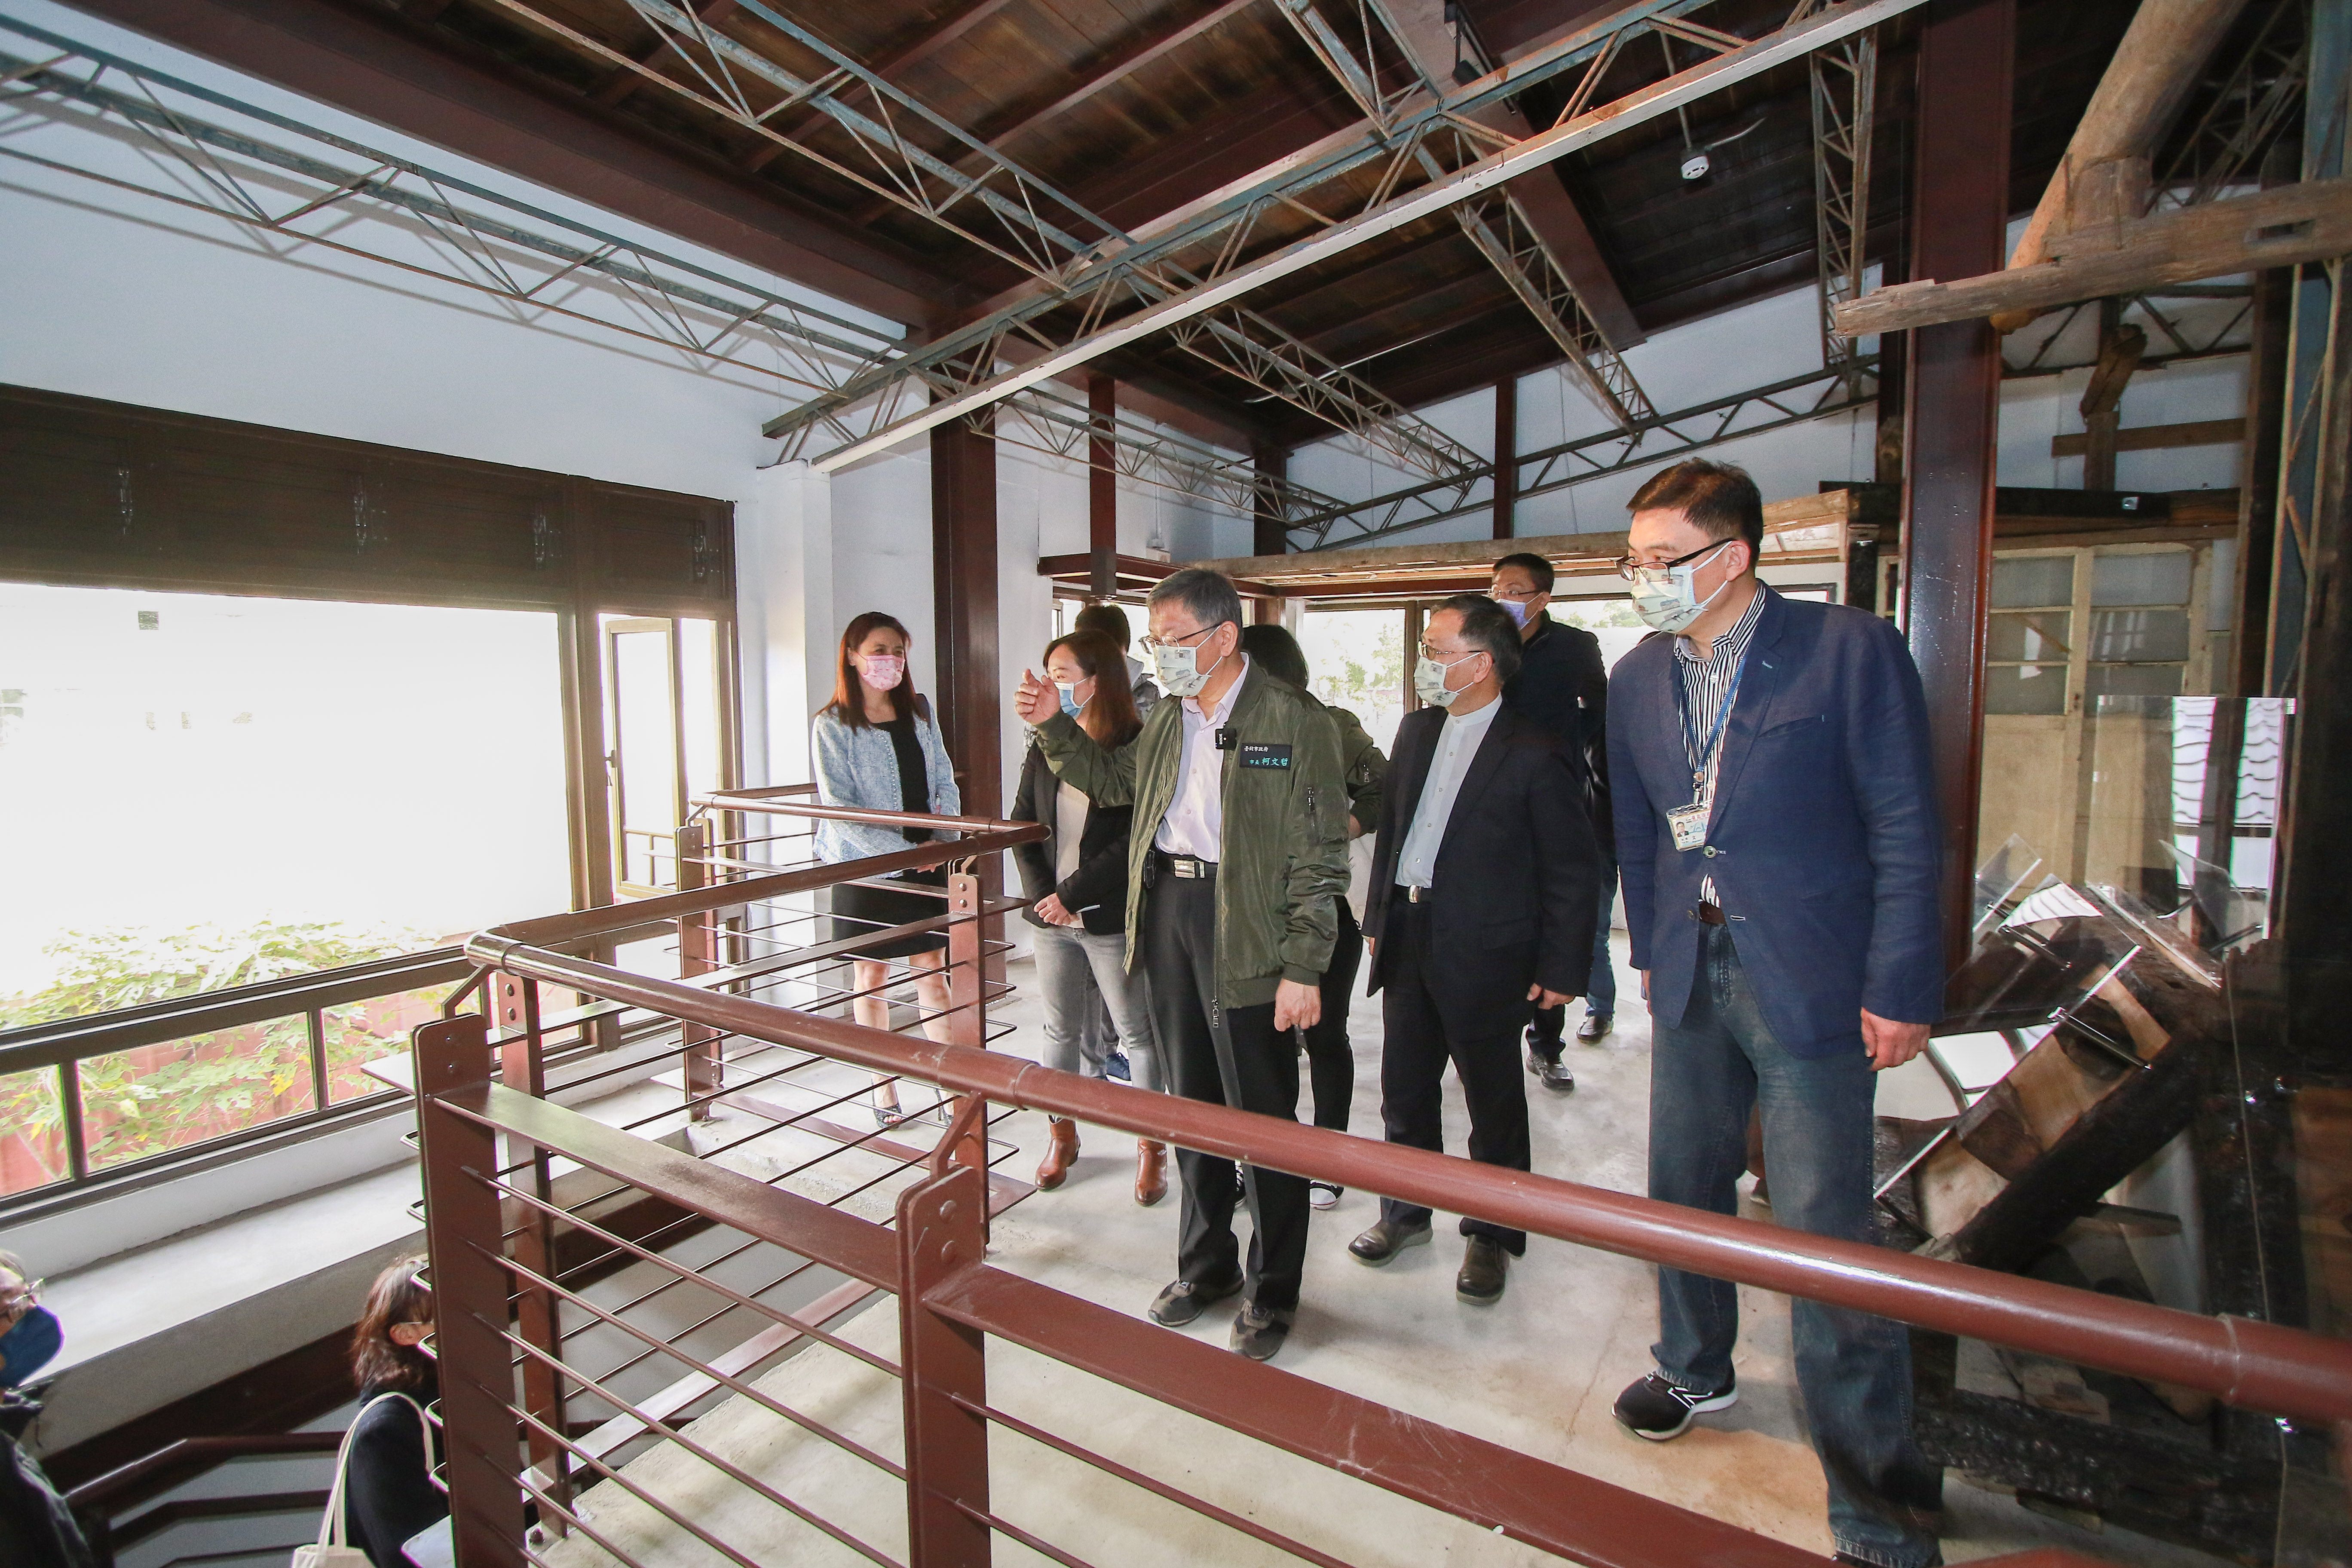 Mayor inspects the restored dormitory